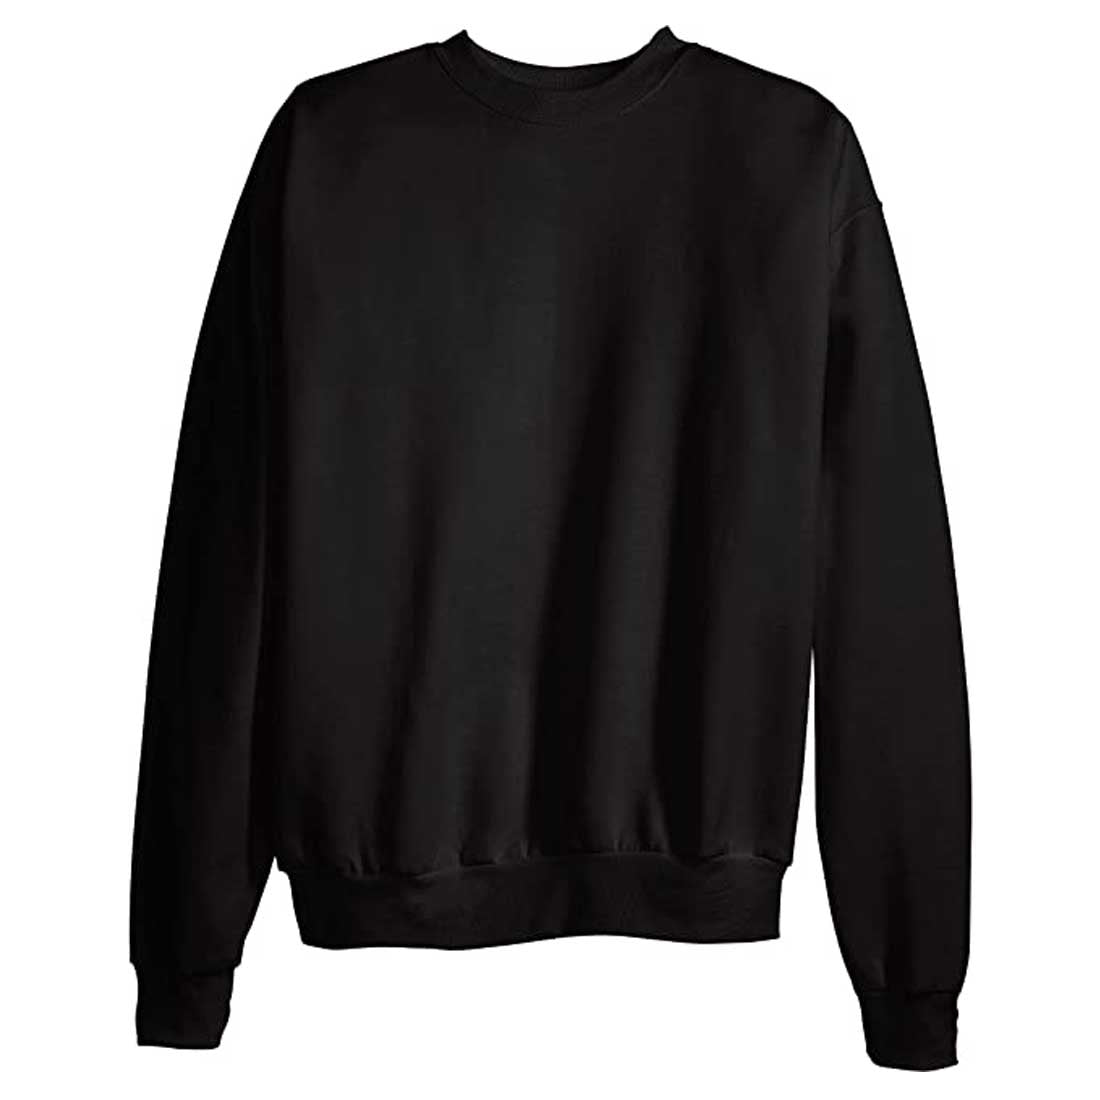 Custom Printed Sweatshirt for Men Relaxed Fit - Add Monogram